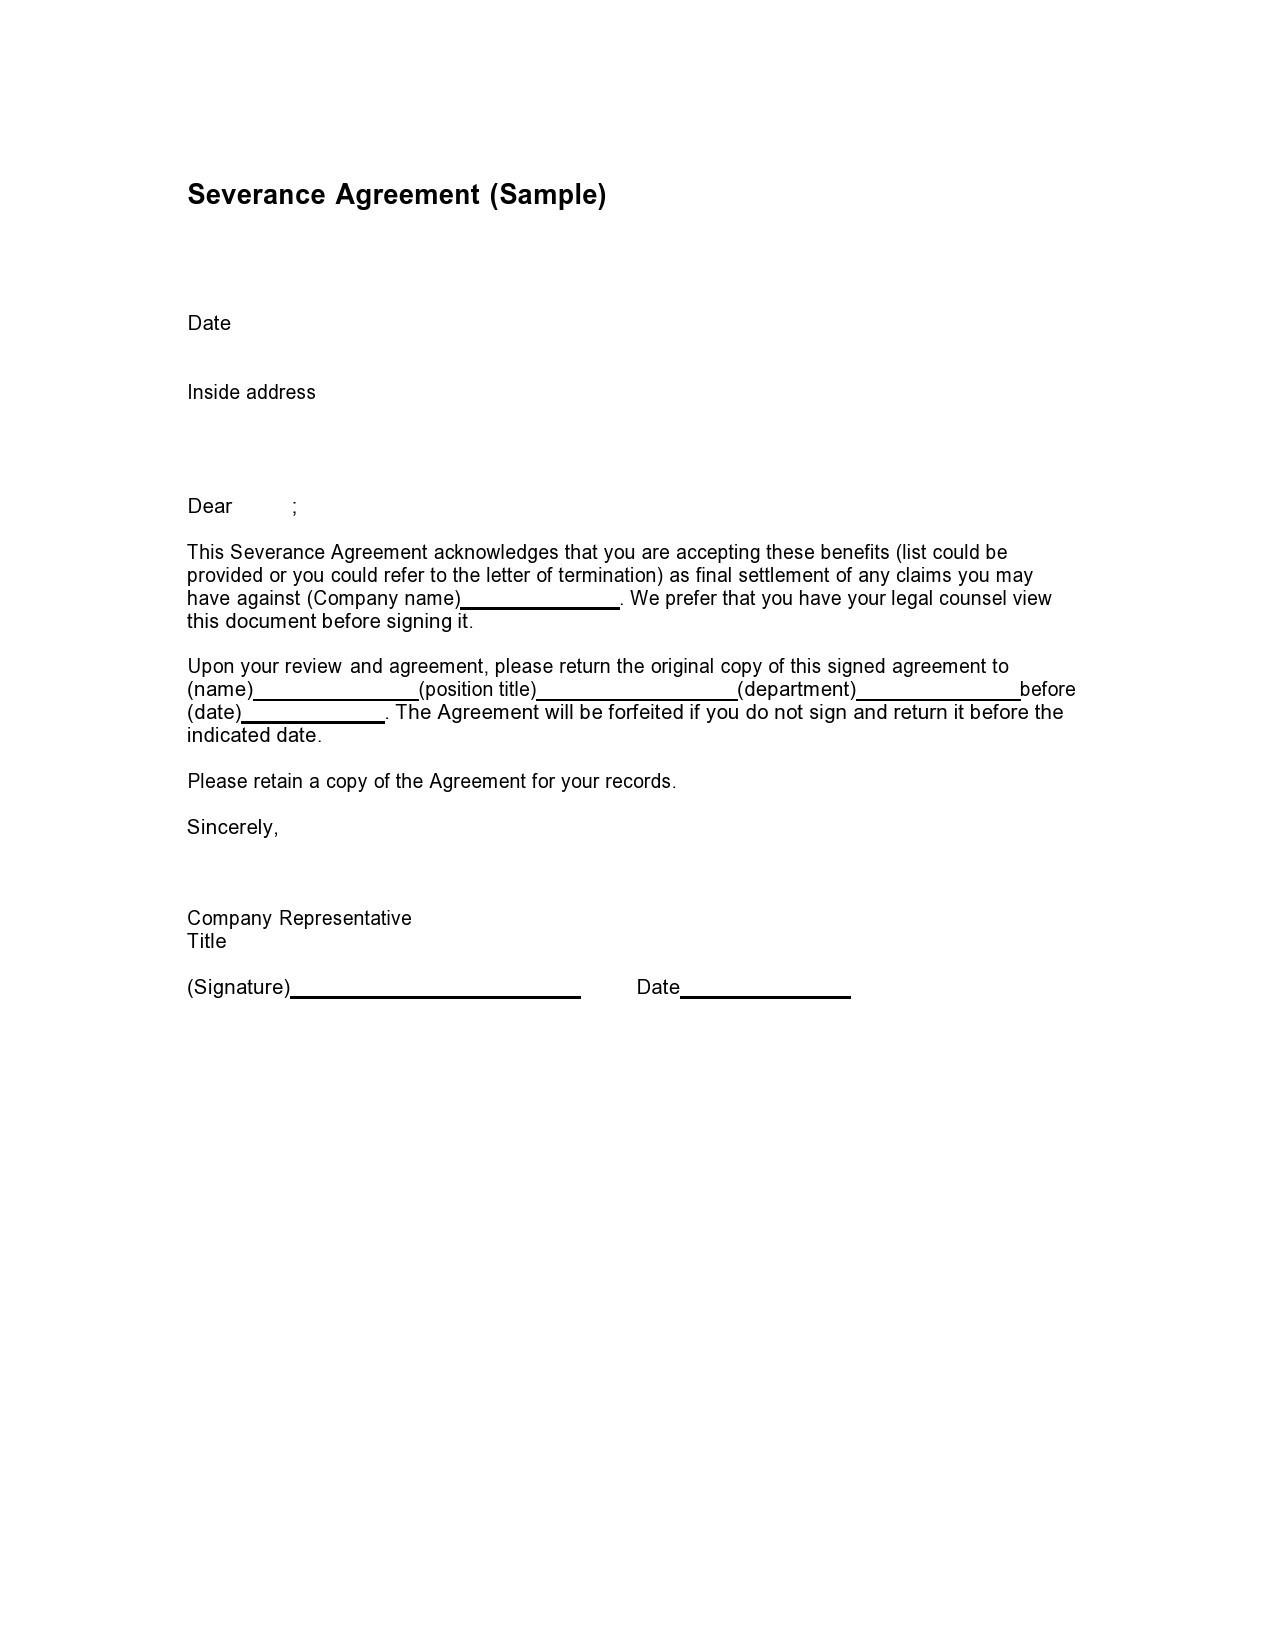 Free severance agreement template 34